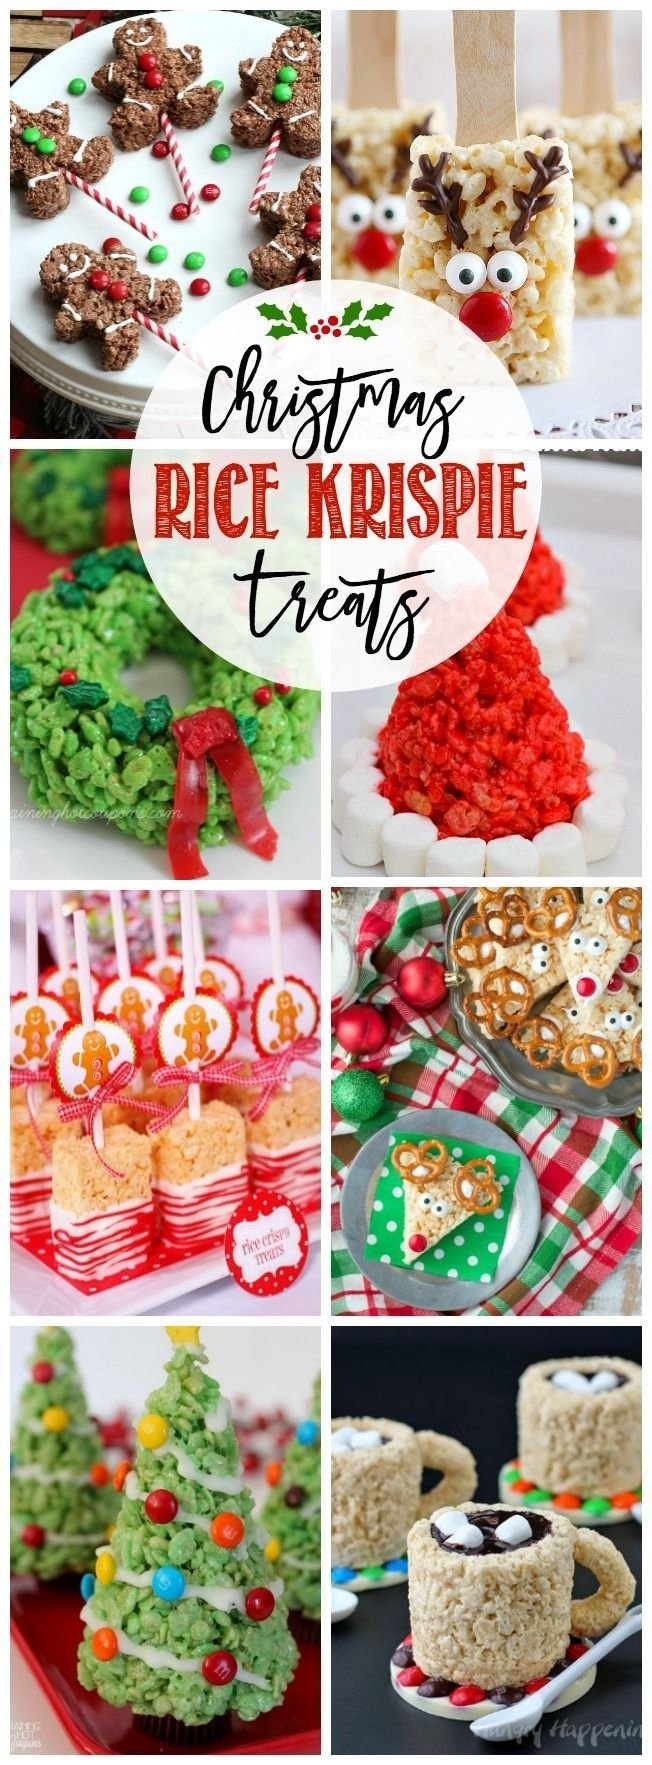 10 Unique Christmas Dessert Ideas For Kids 852 best holidays christmas goodies images on pinterest 1 2022